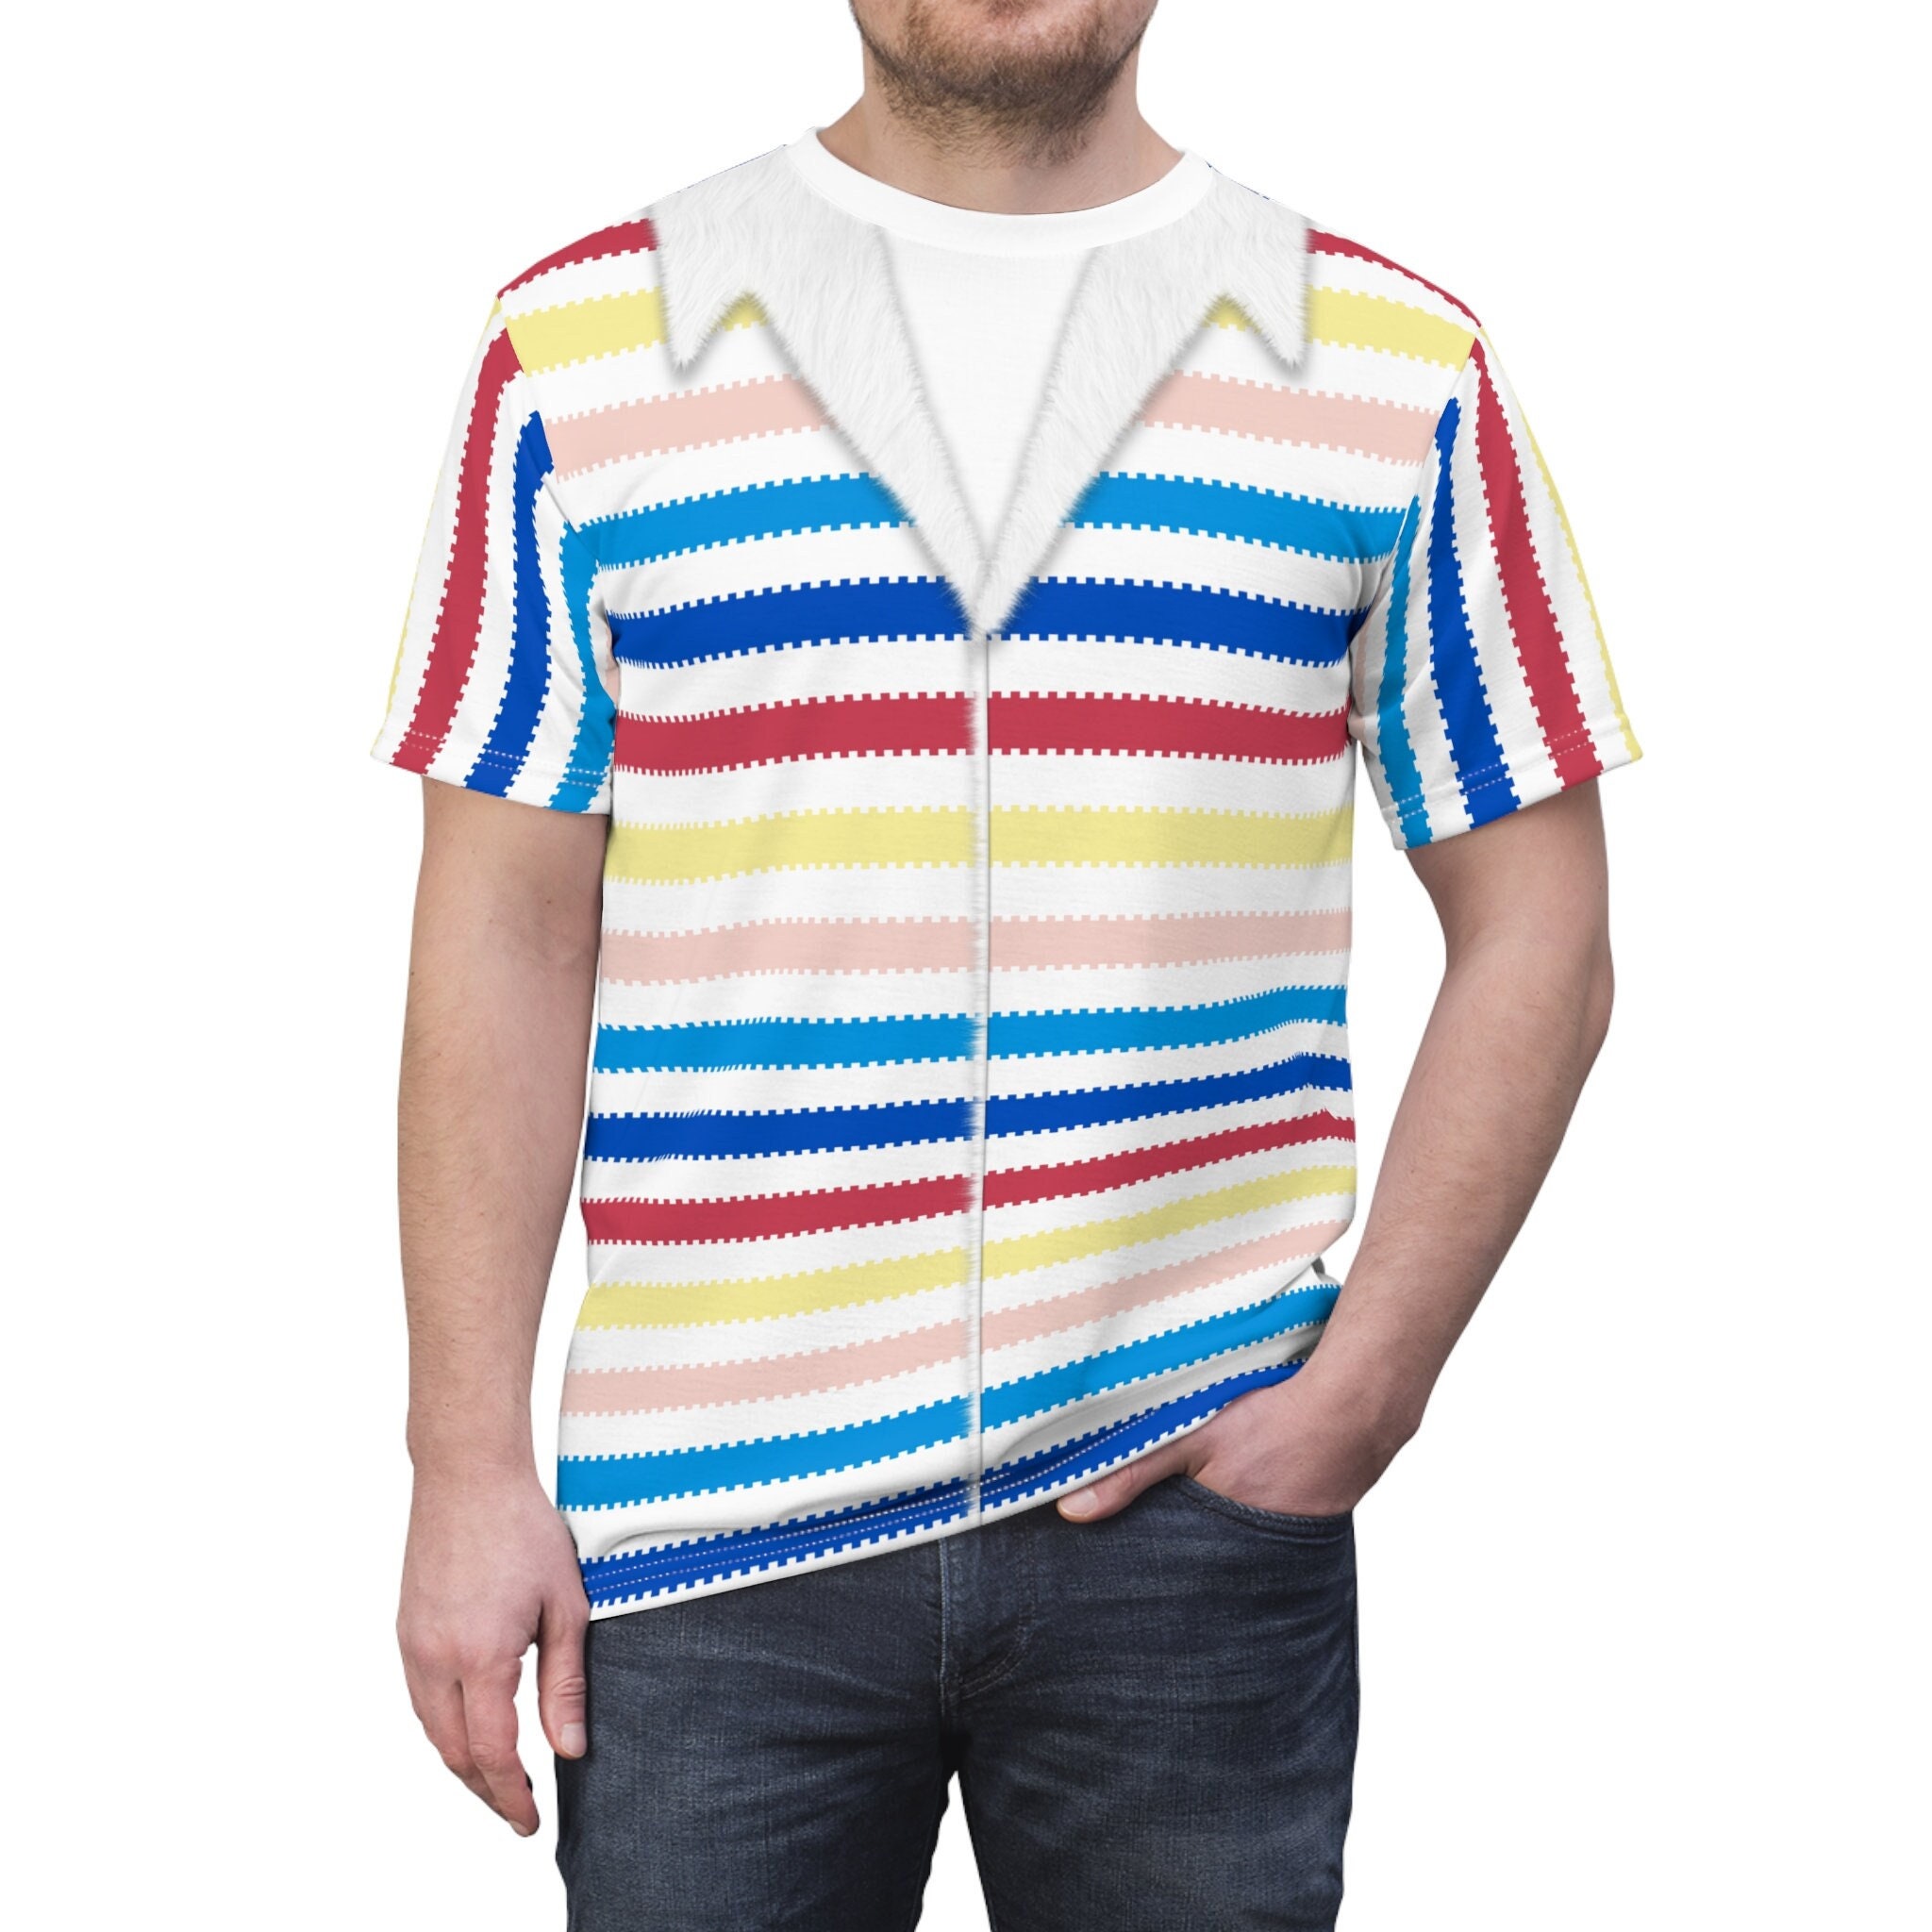 2023 Doll Movie Allan Rainbow Striped Shirt Outfits Halloween Carnival